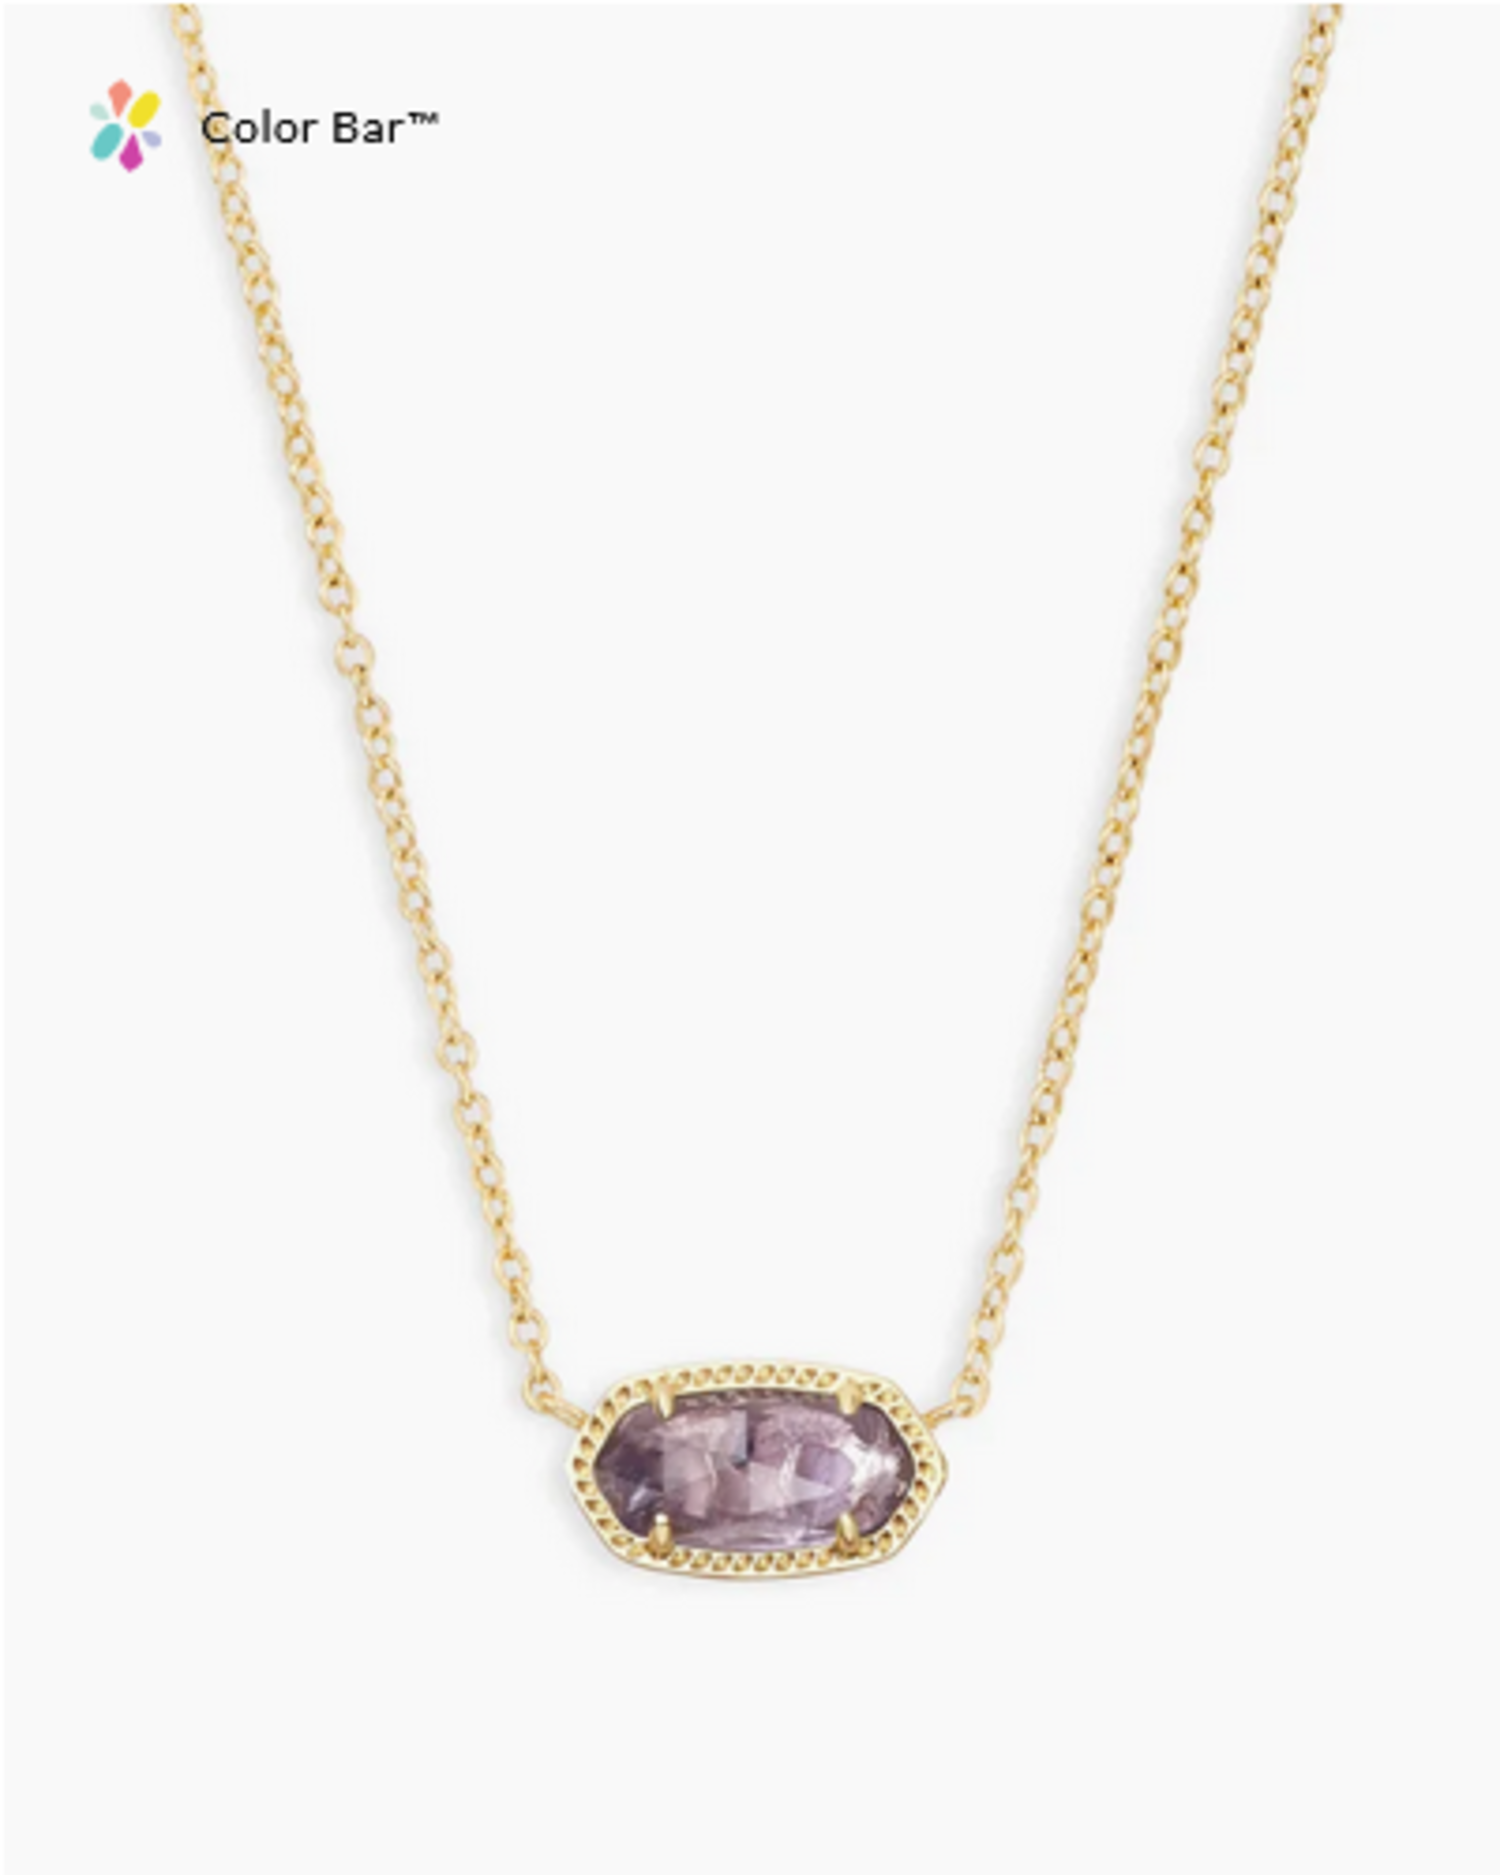 Purple Pendant Set - Pendant Set for Women - Birthday Gift for Girls -  Cherry Purple Crystal Pendant Necklace Set by Blingvine